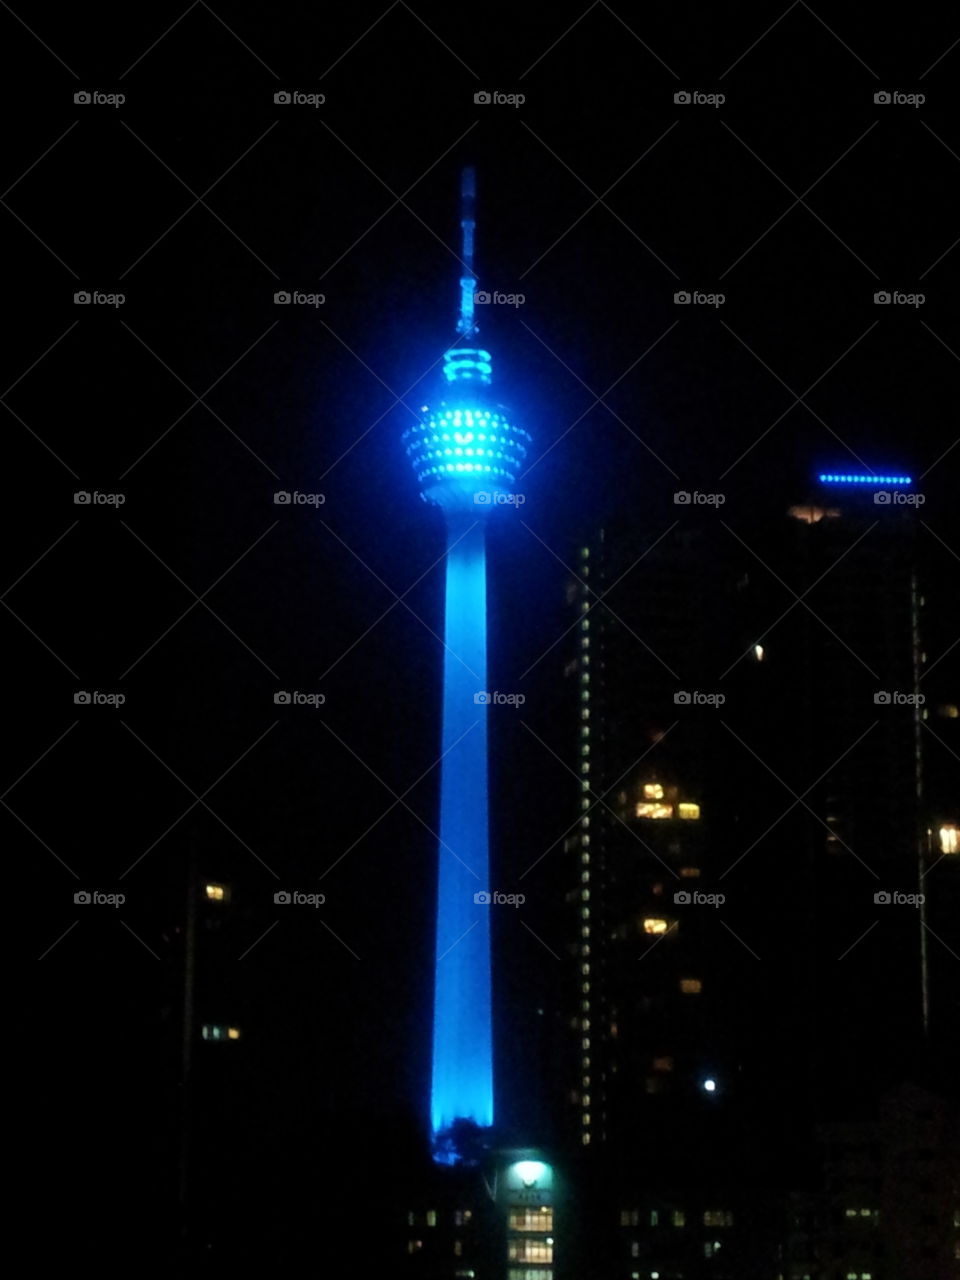 The lighting tower. The lighting tower in Kuala Lumpur